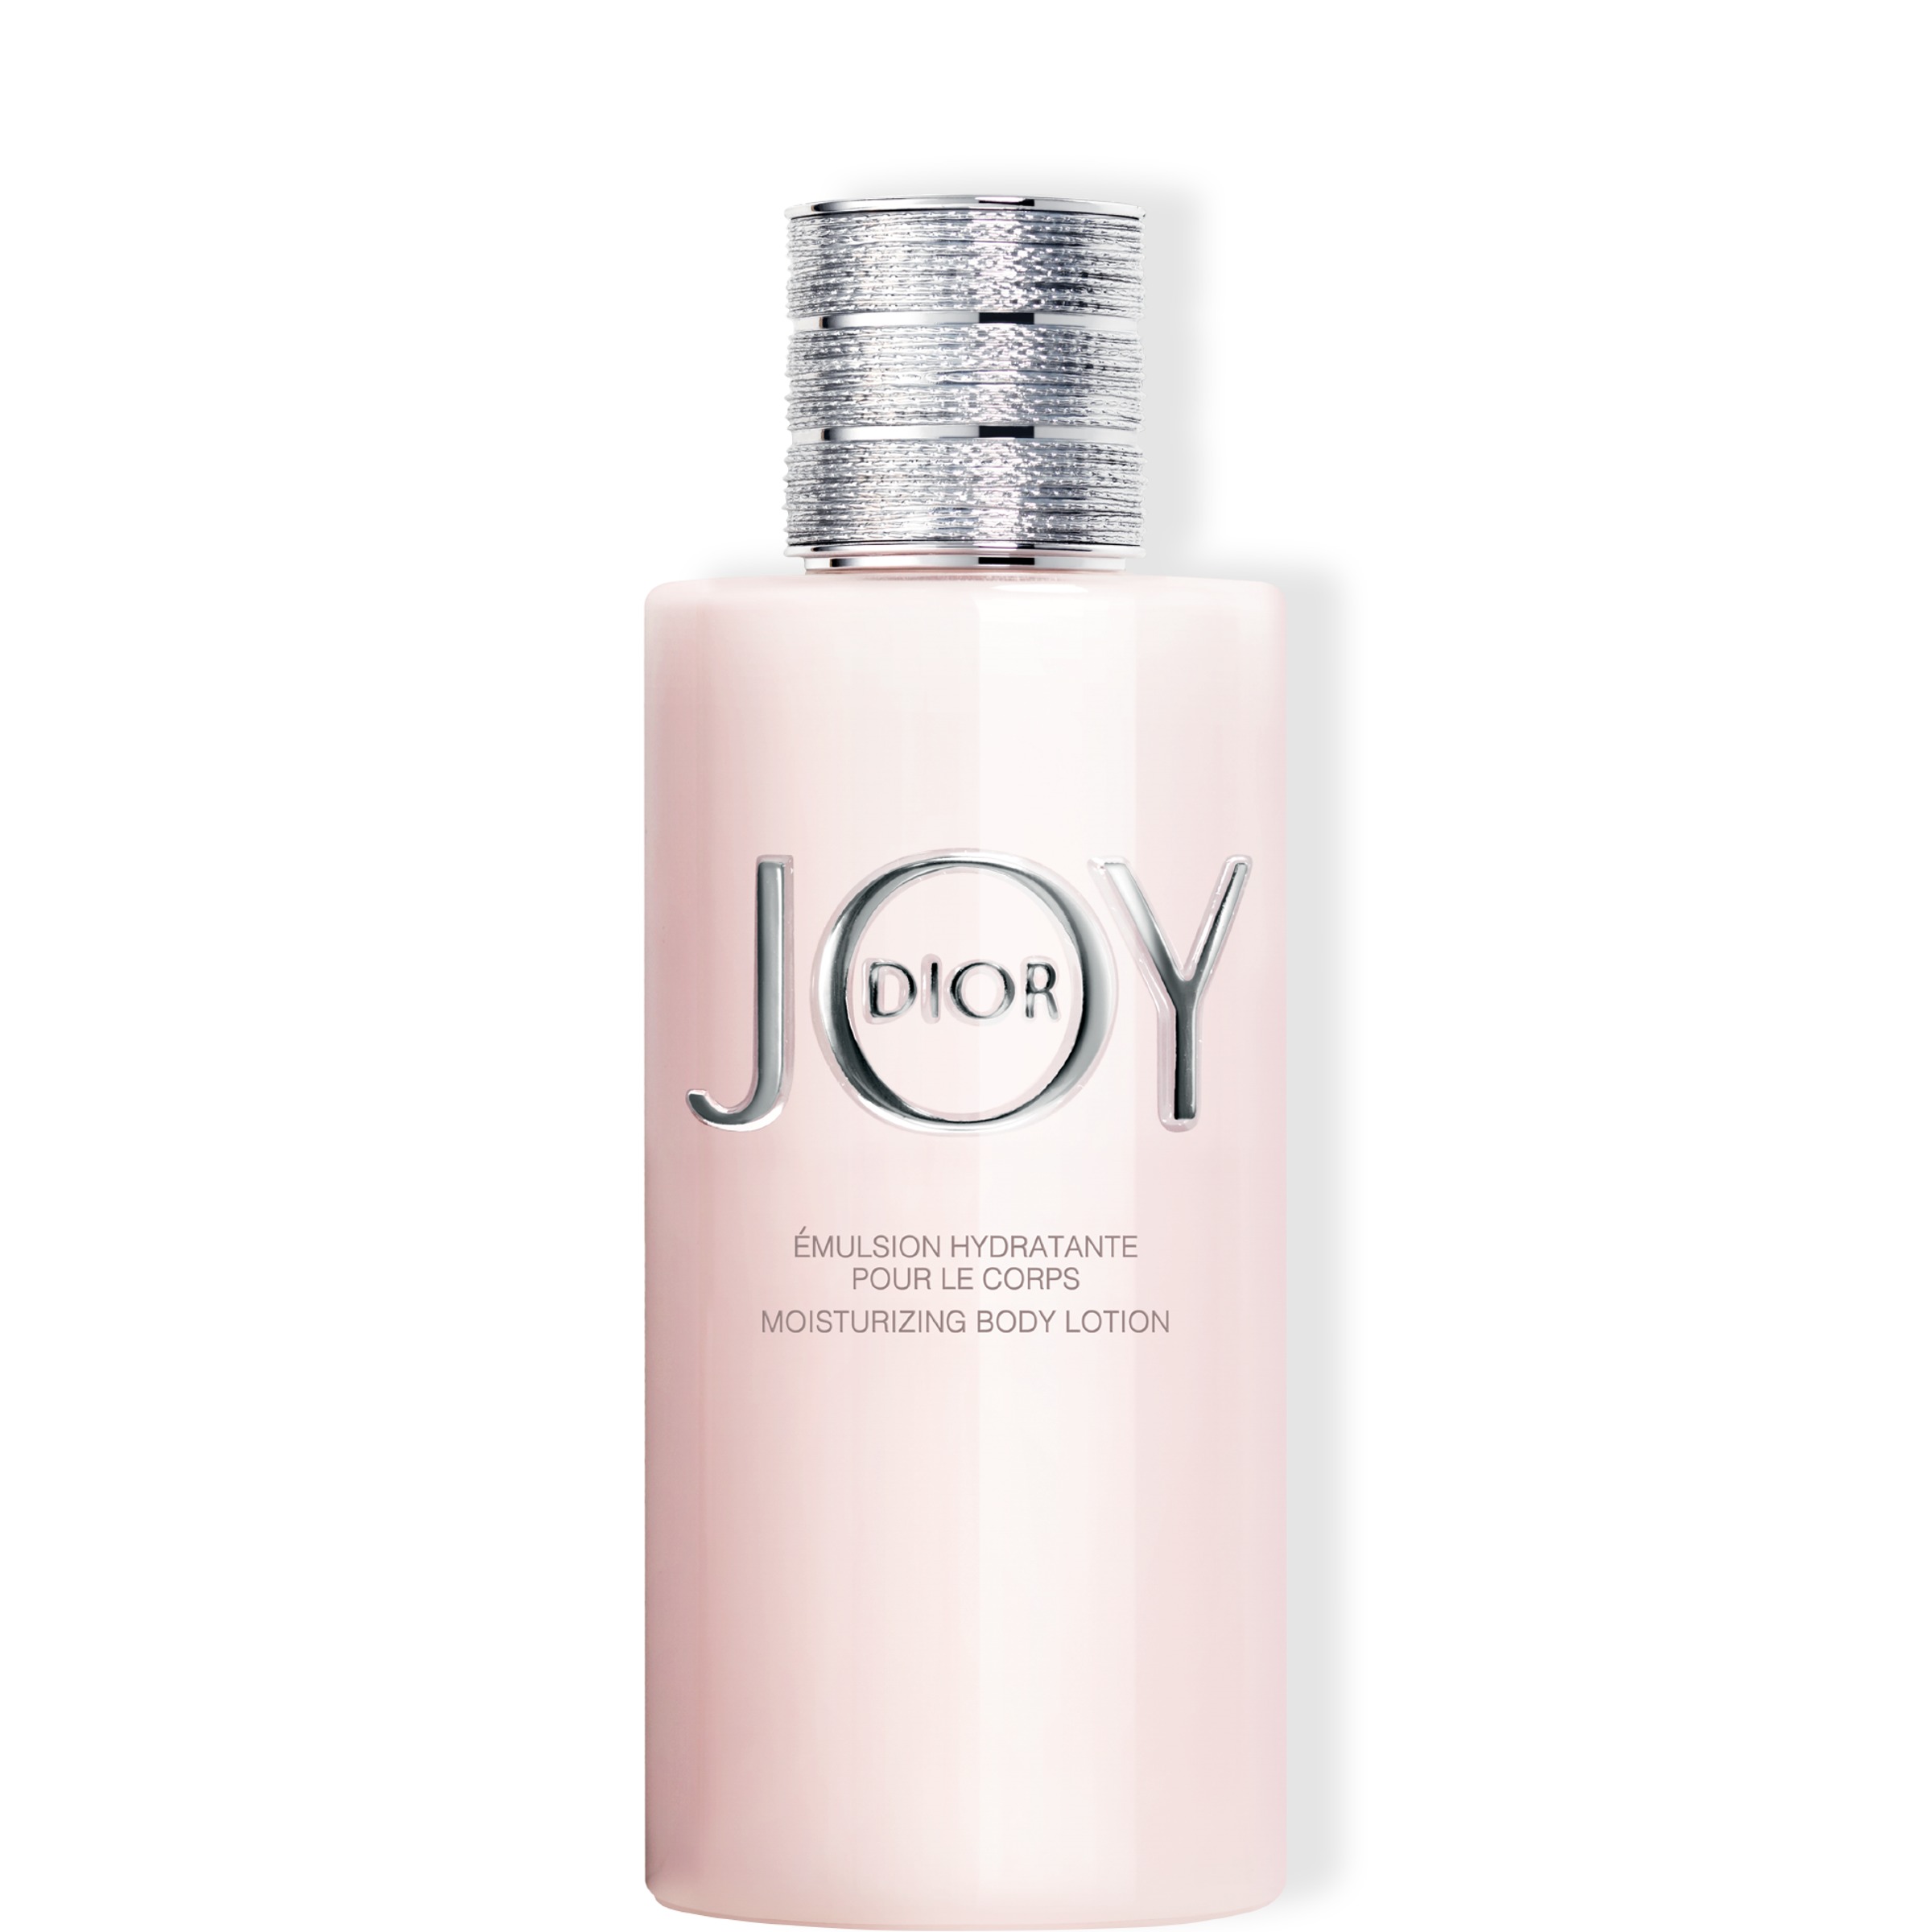 JOY by Dior Body Lotion